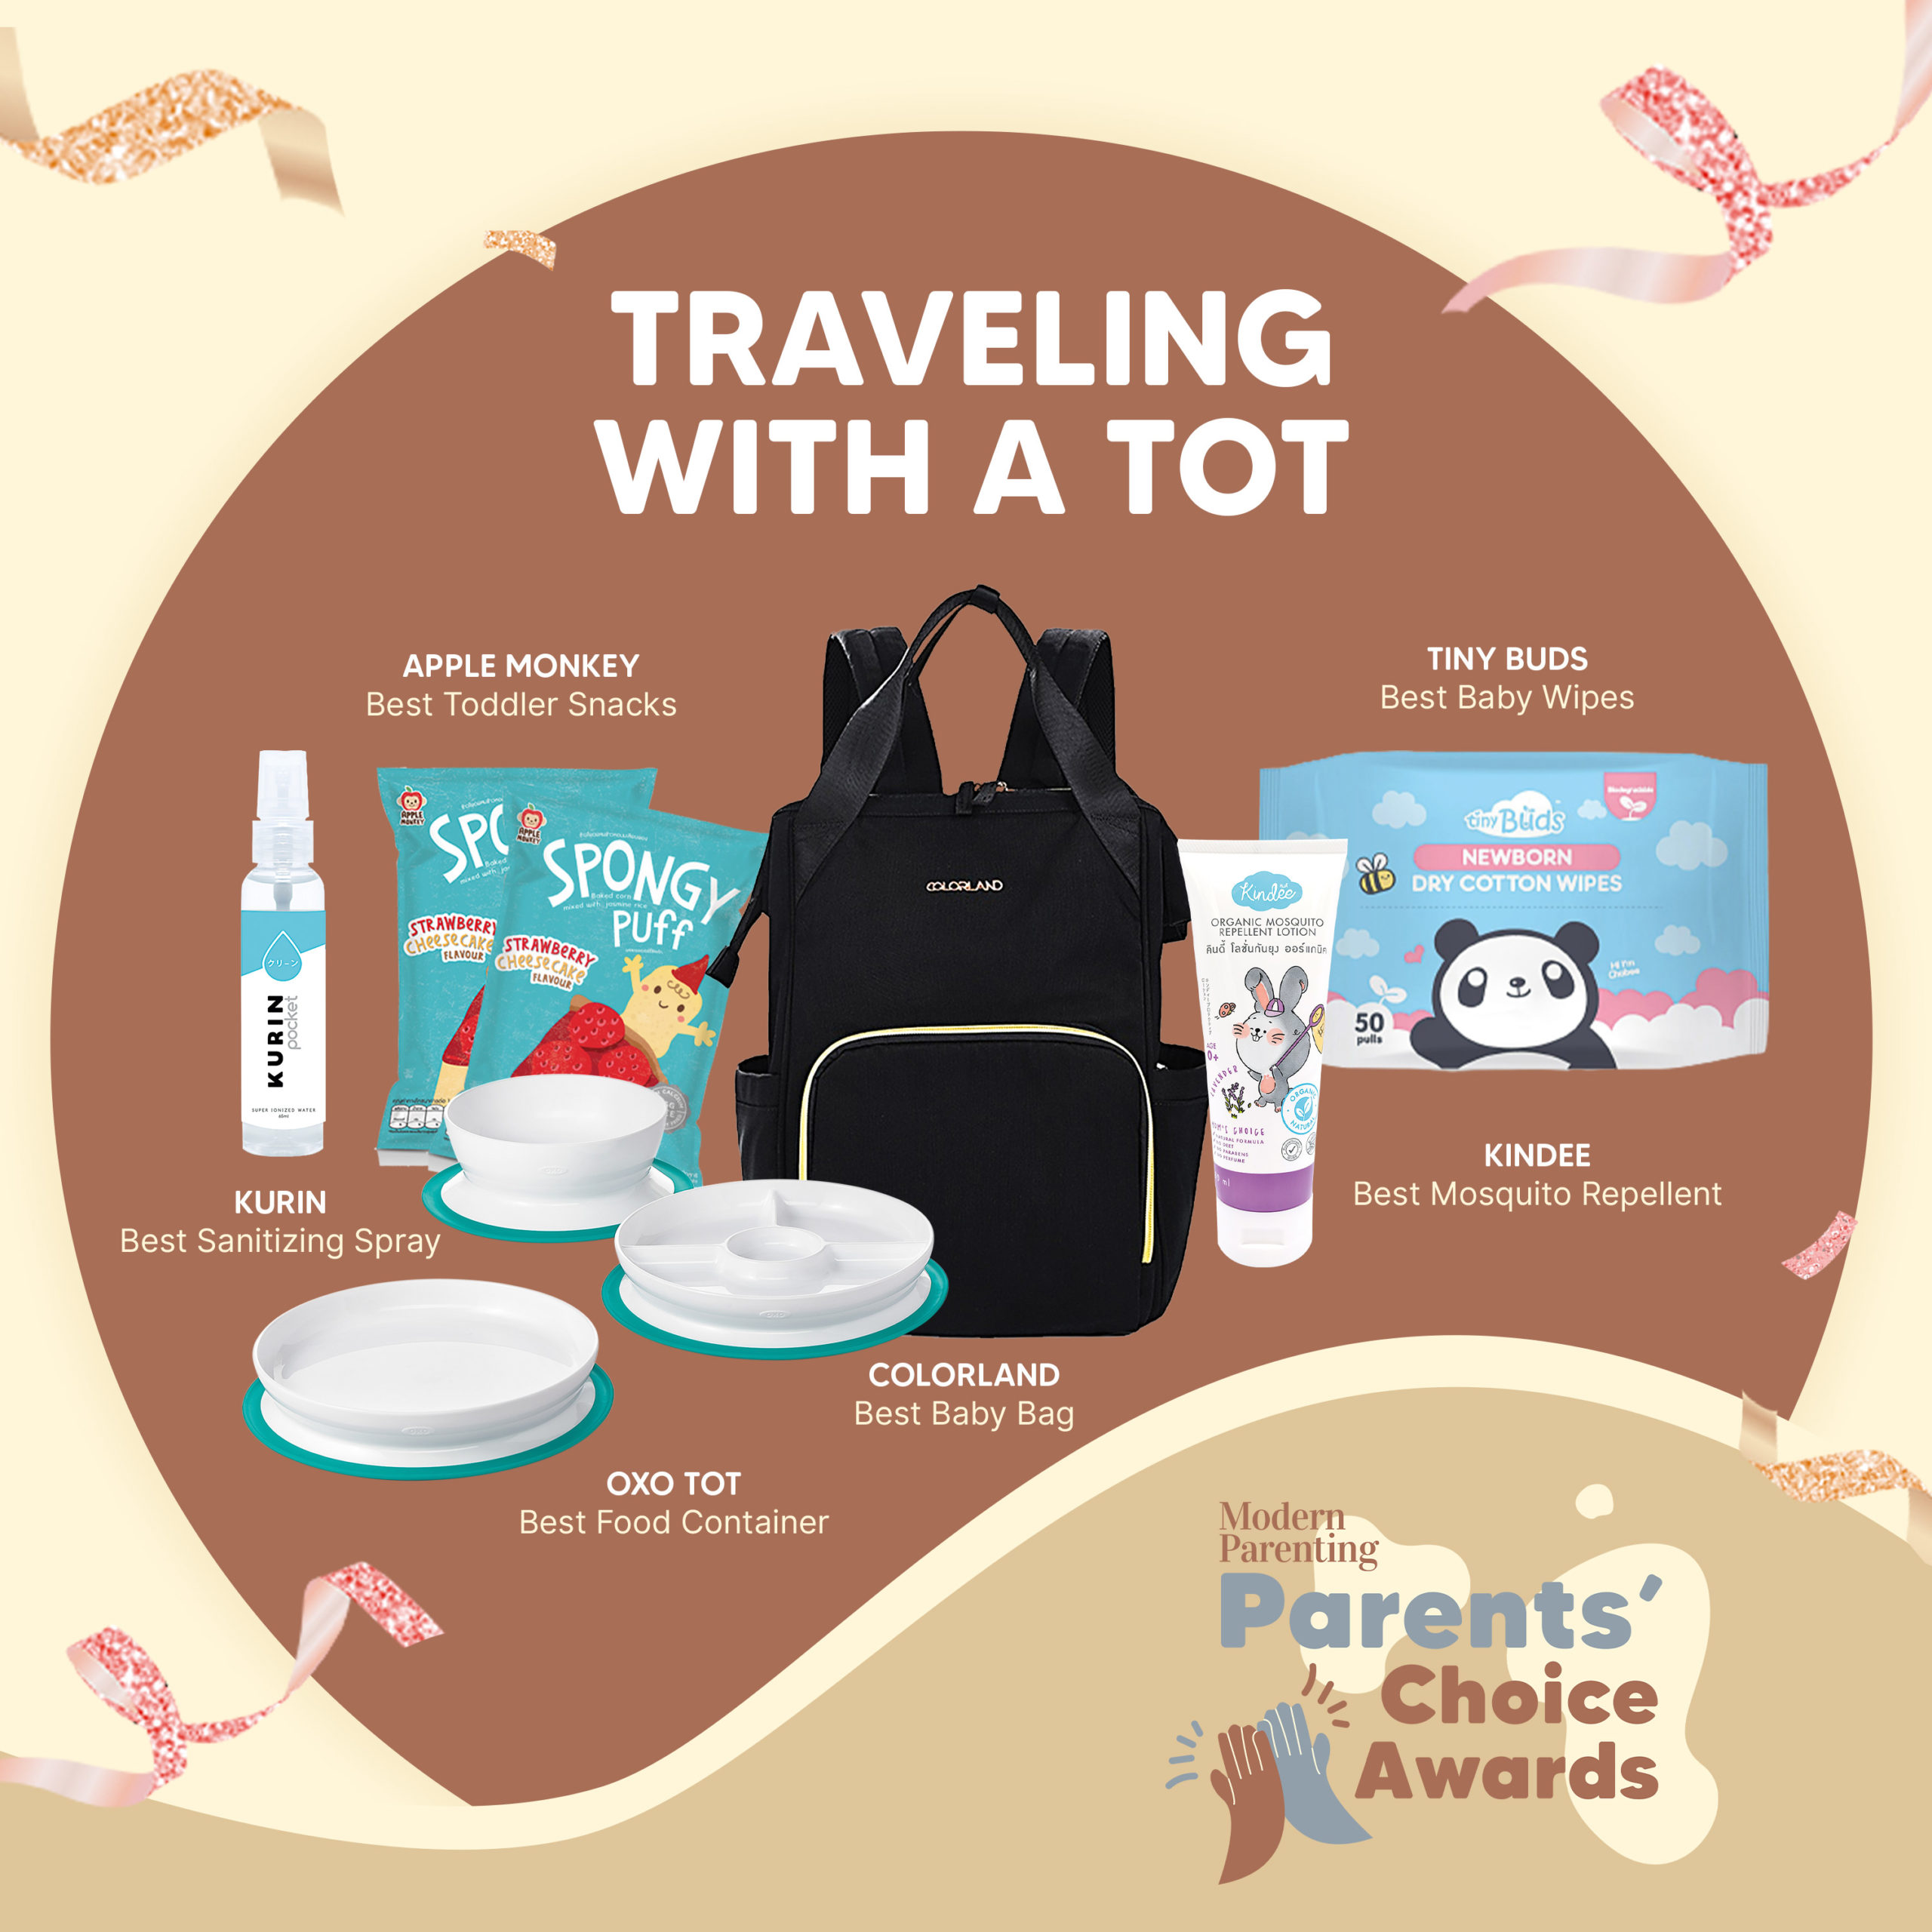 The Modern Parenting Travel Essentials